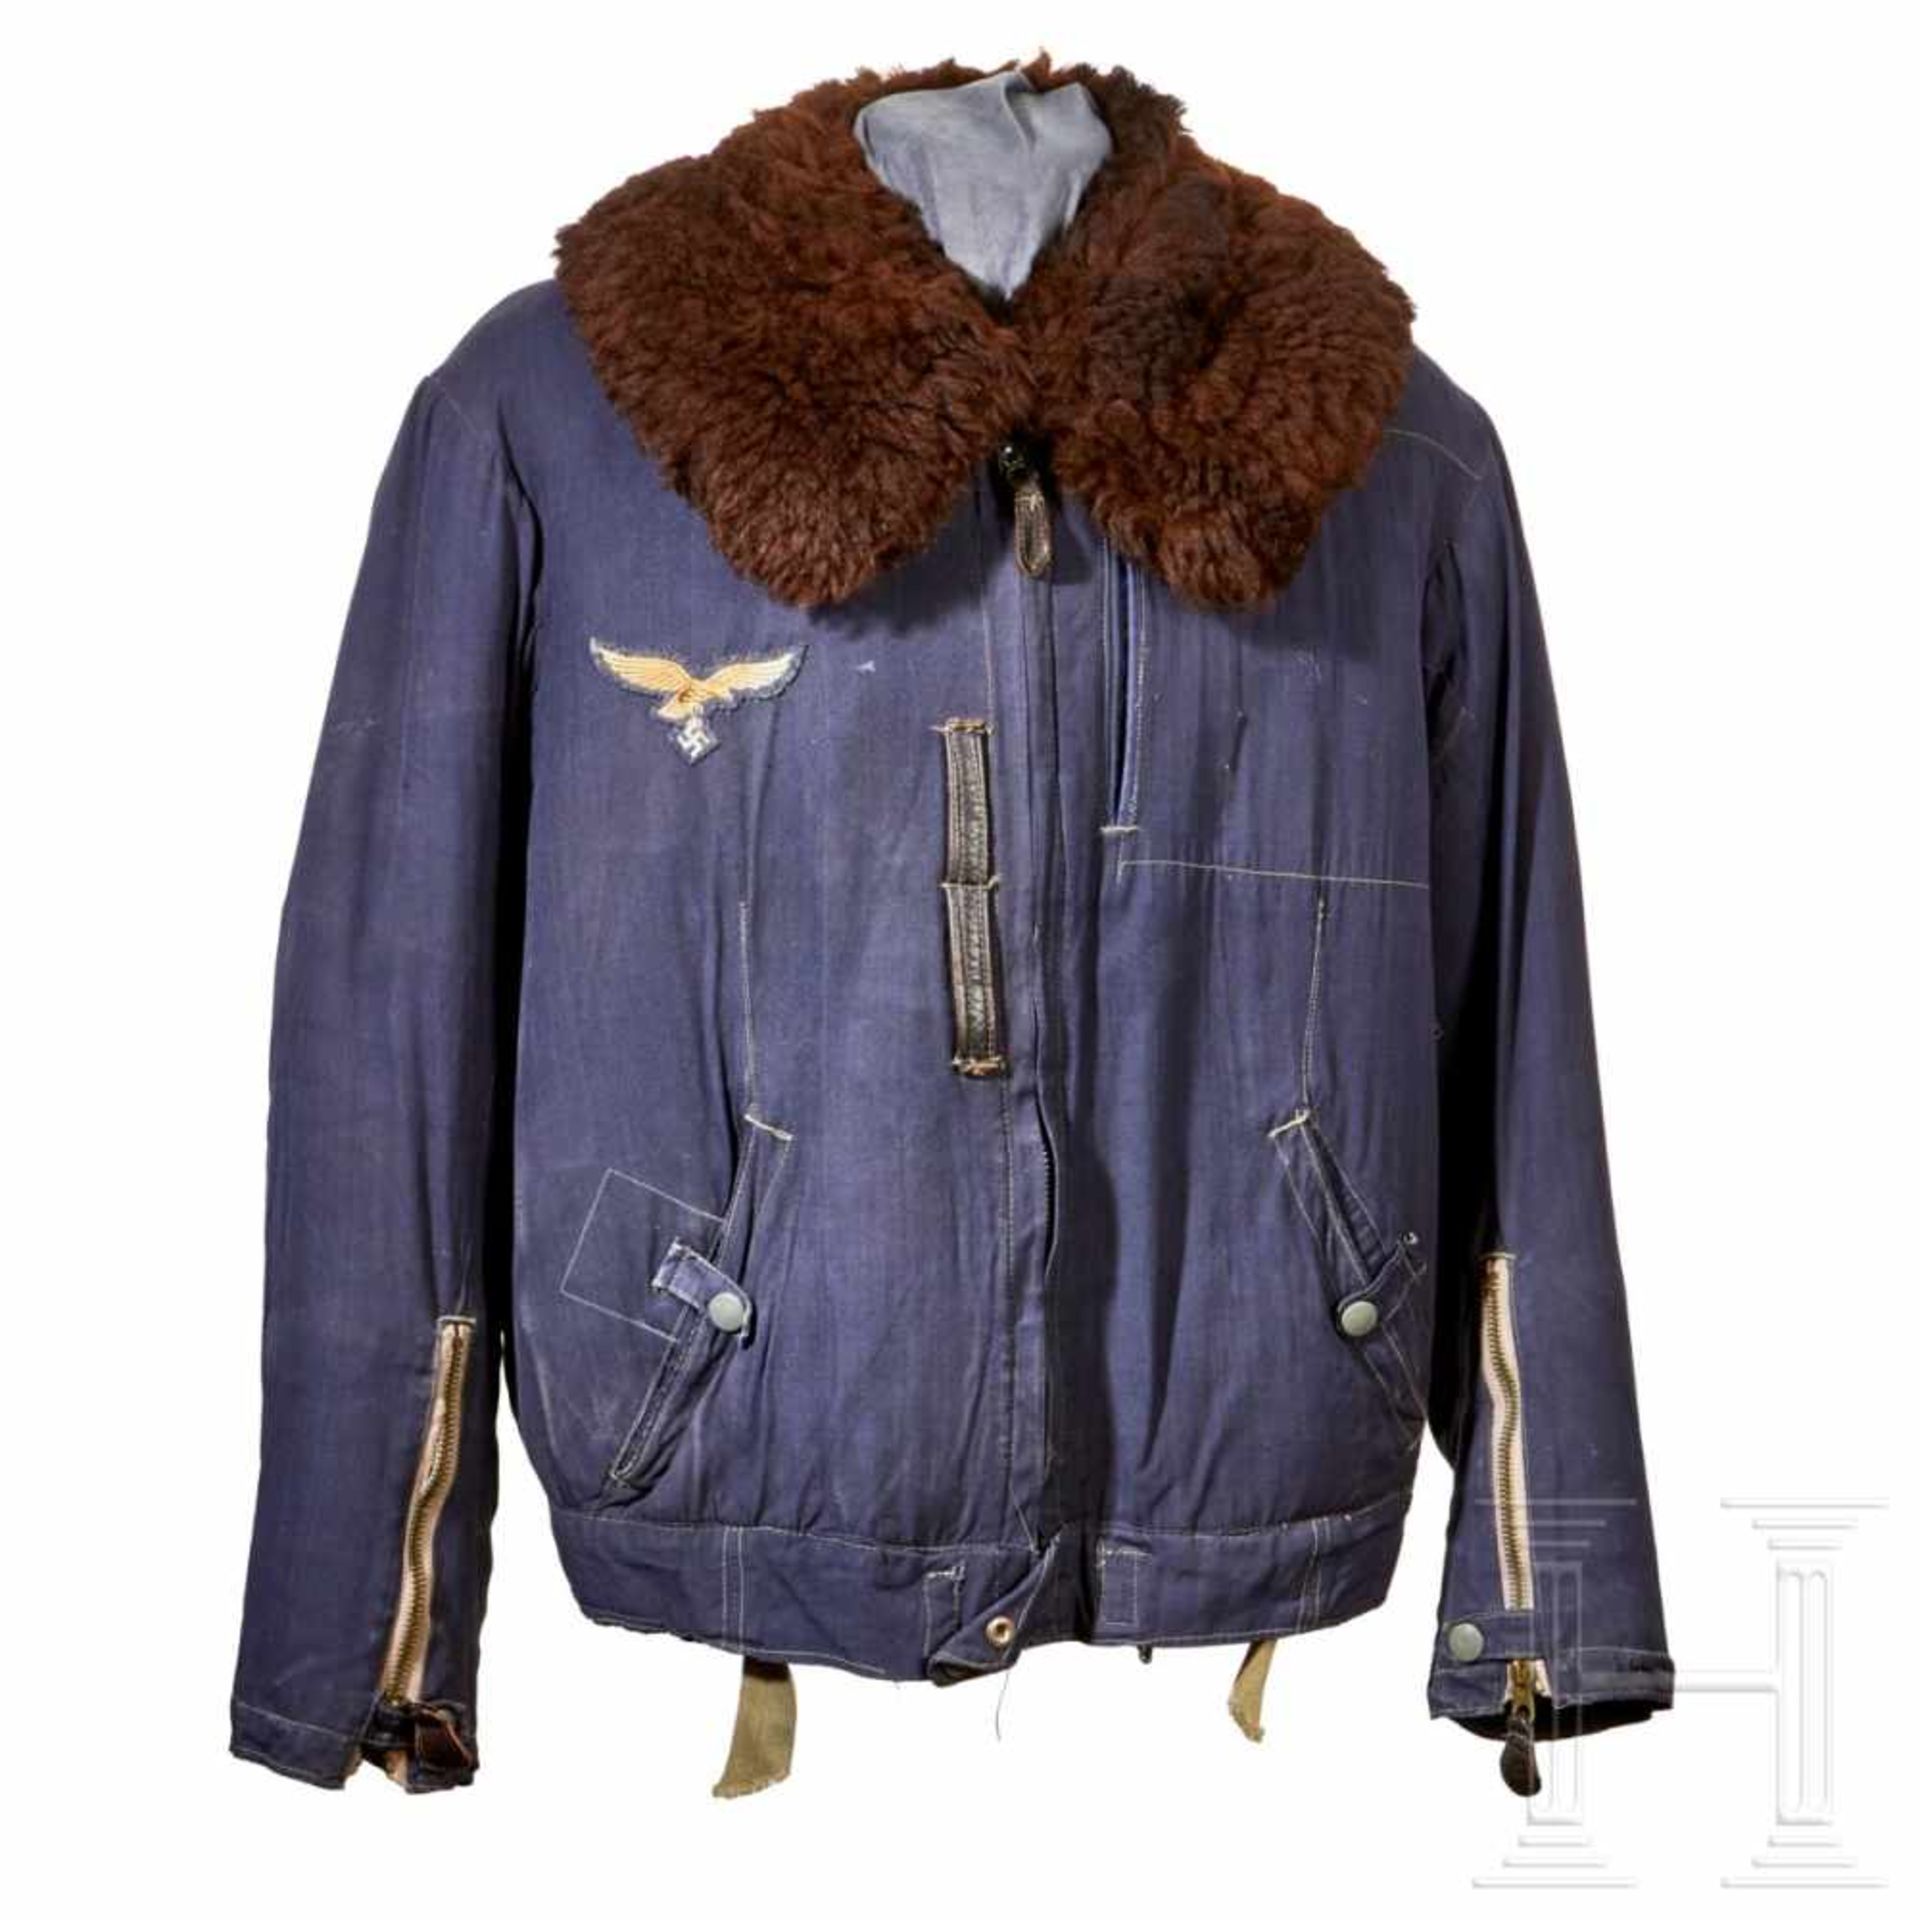 A Winter Flight JacketBlue, fur-lined winter flight jacket for aircraft crews constructed of woven